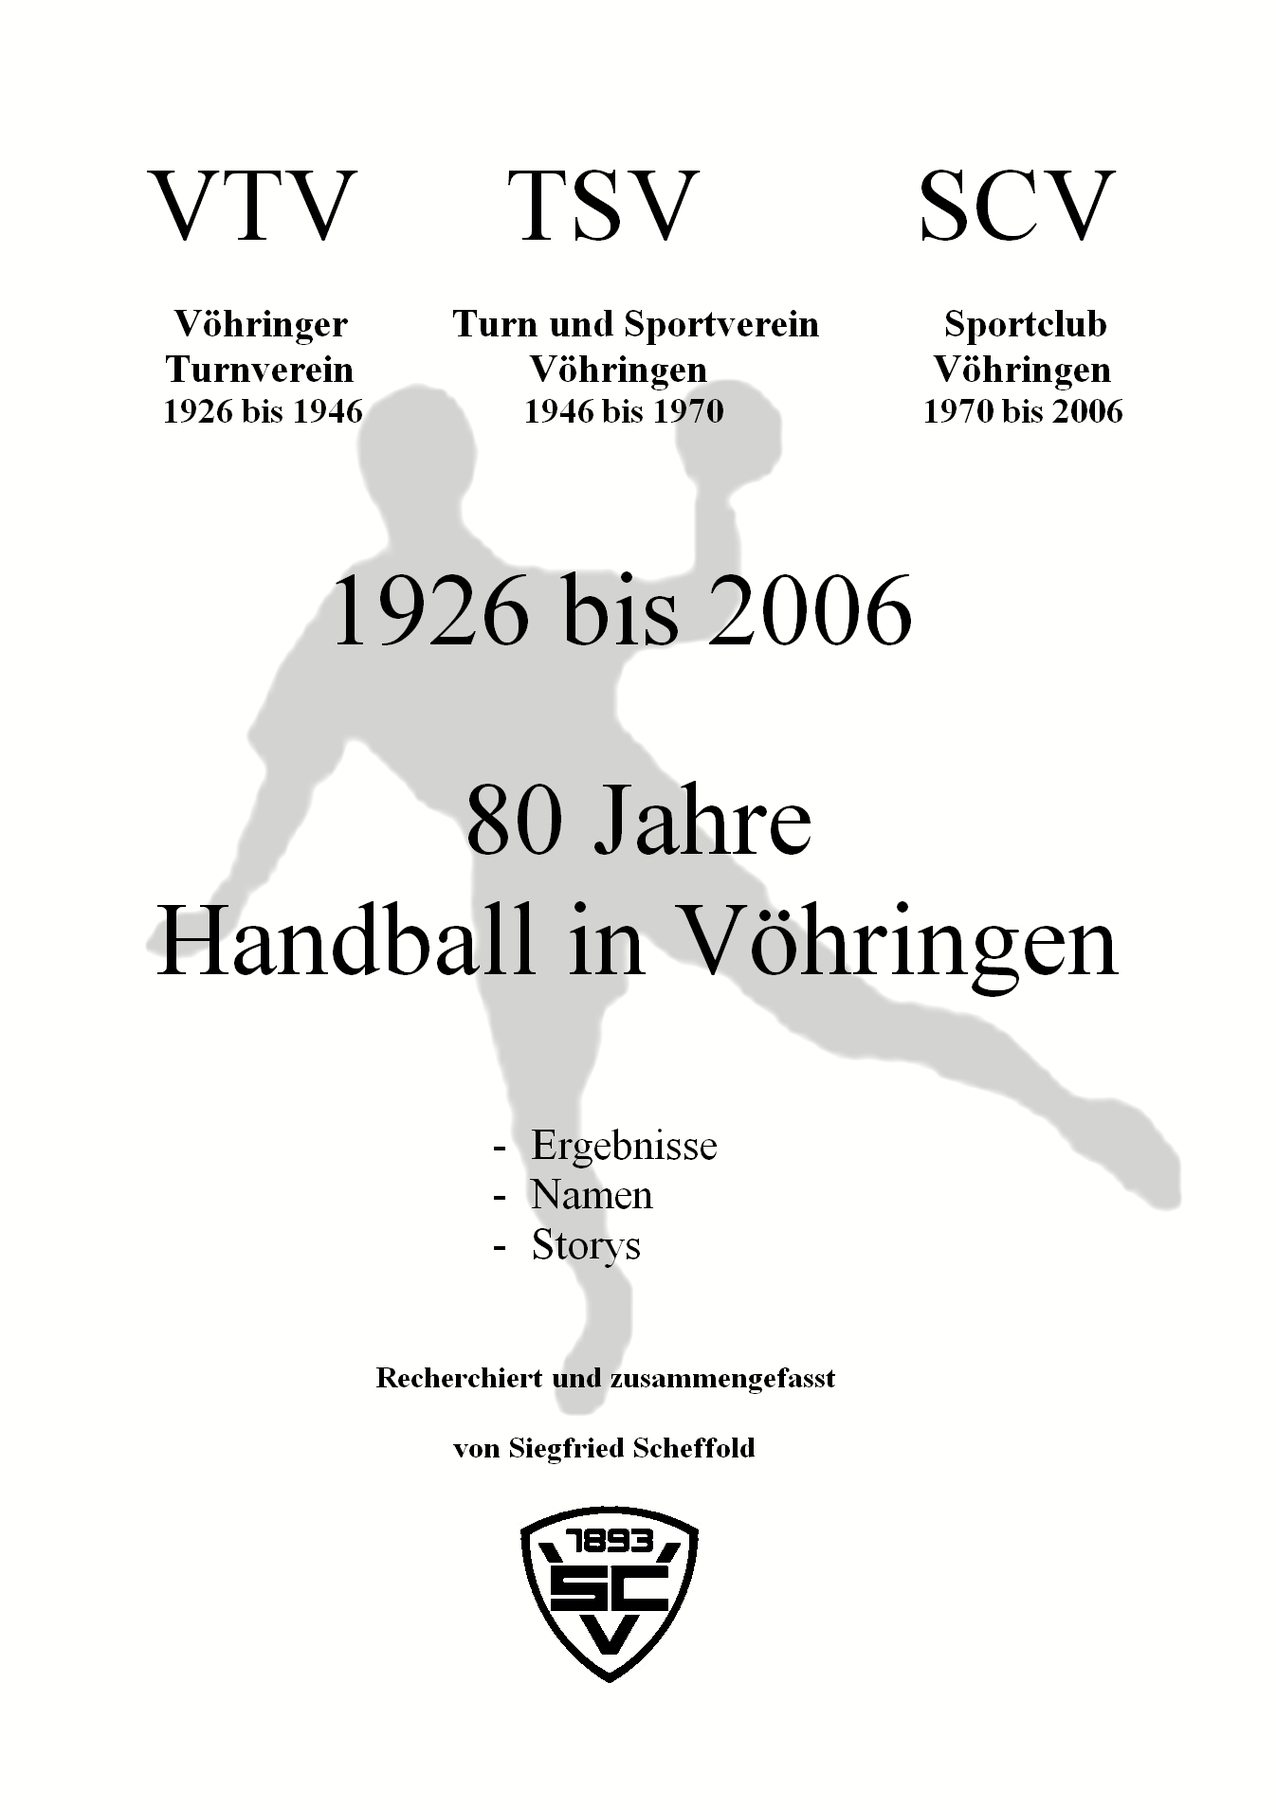 Titelblatt der Chronik zum 80-jährigen Jubiläum der Handballabteilung